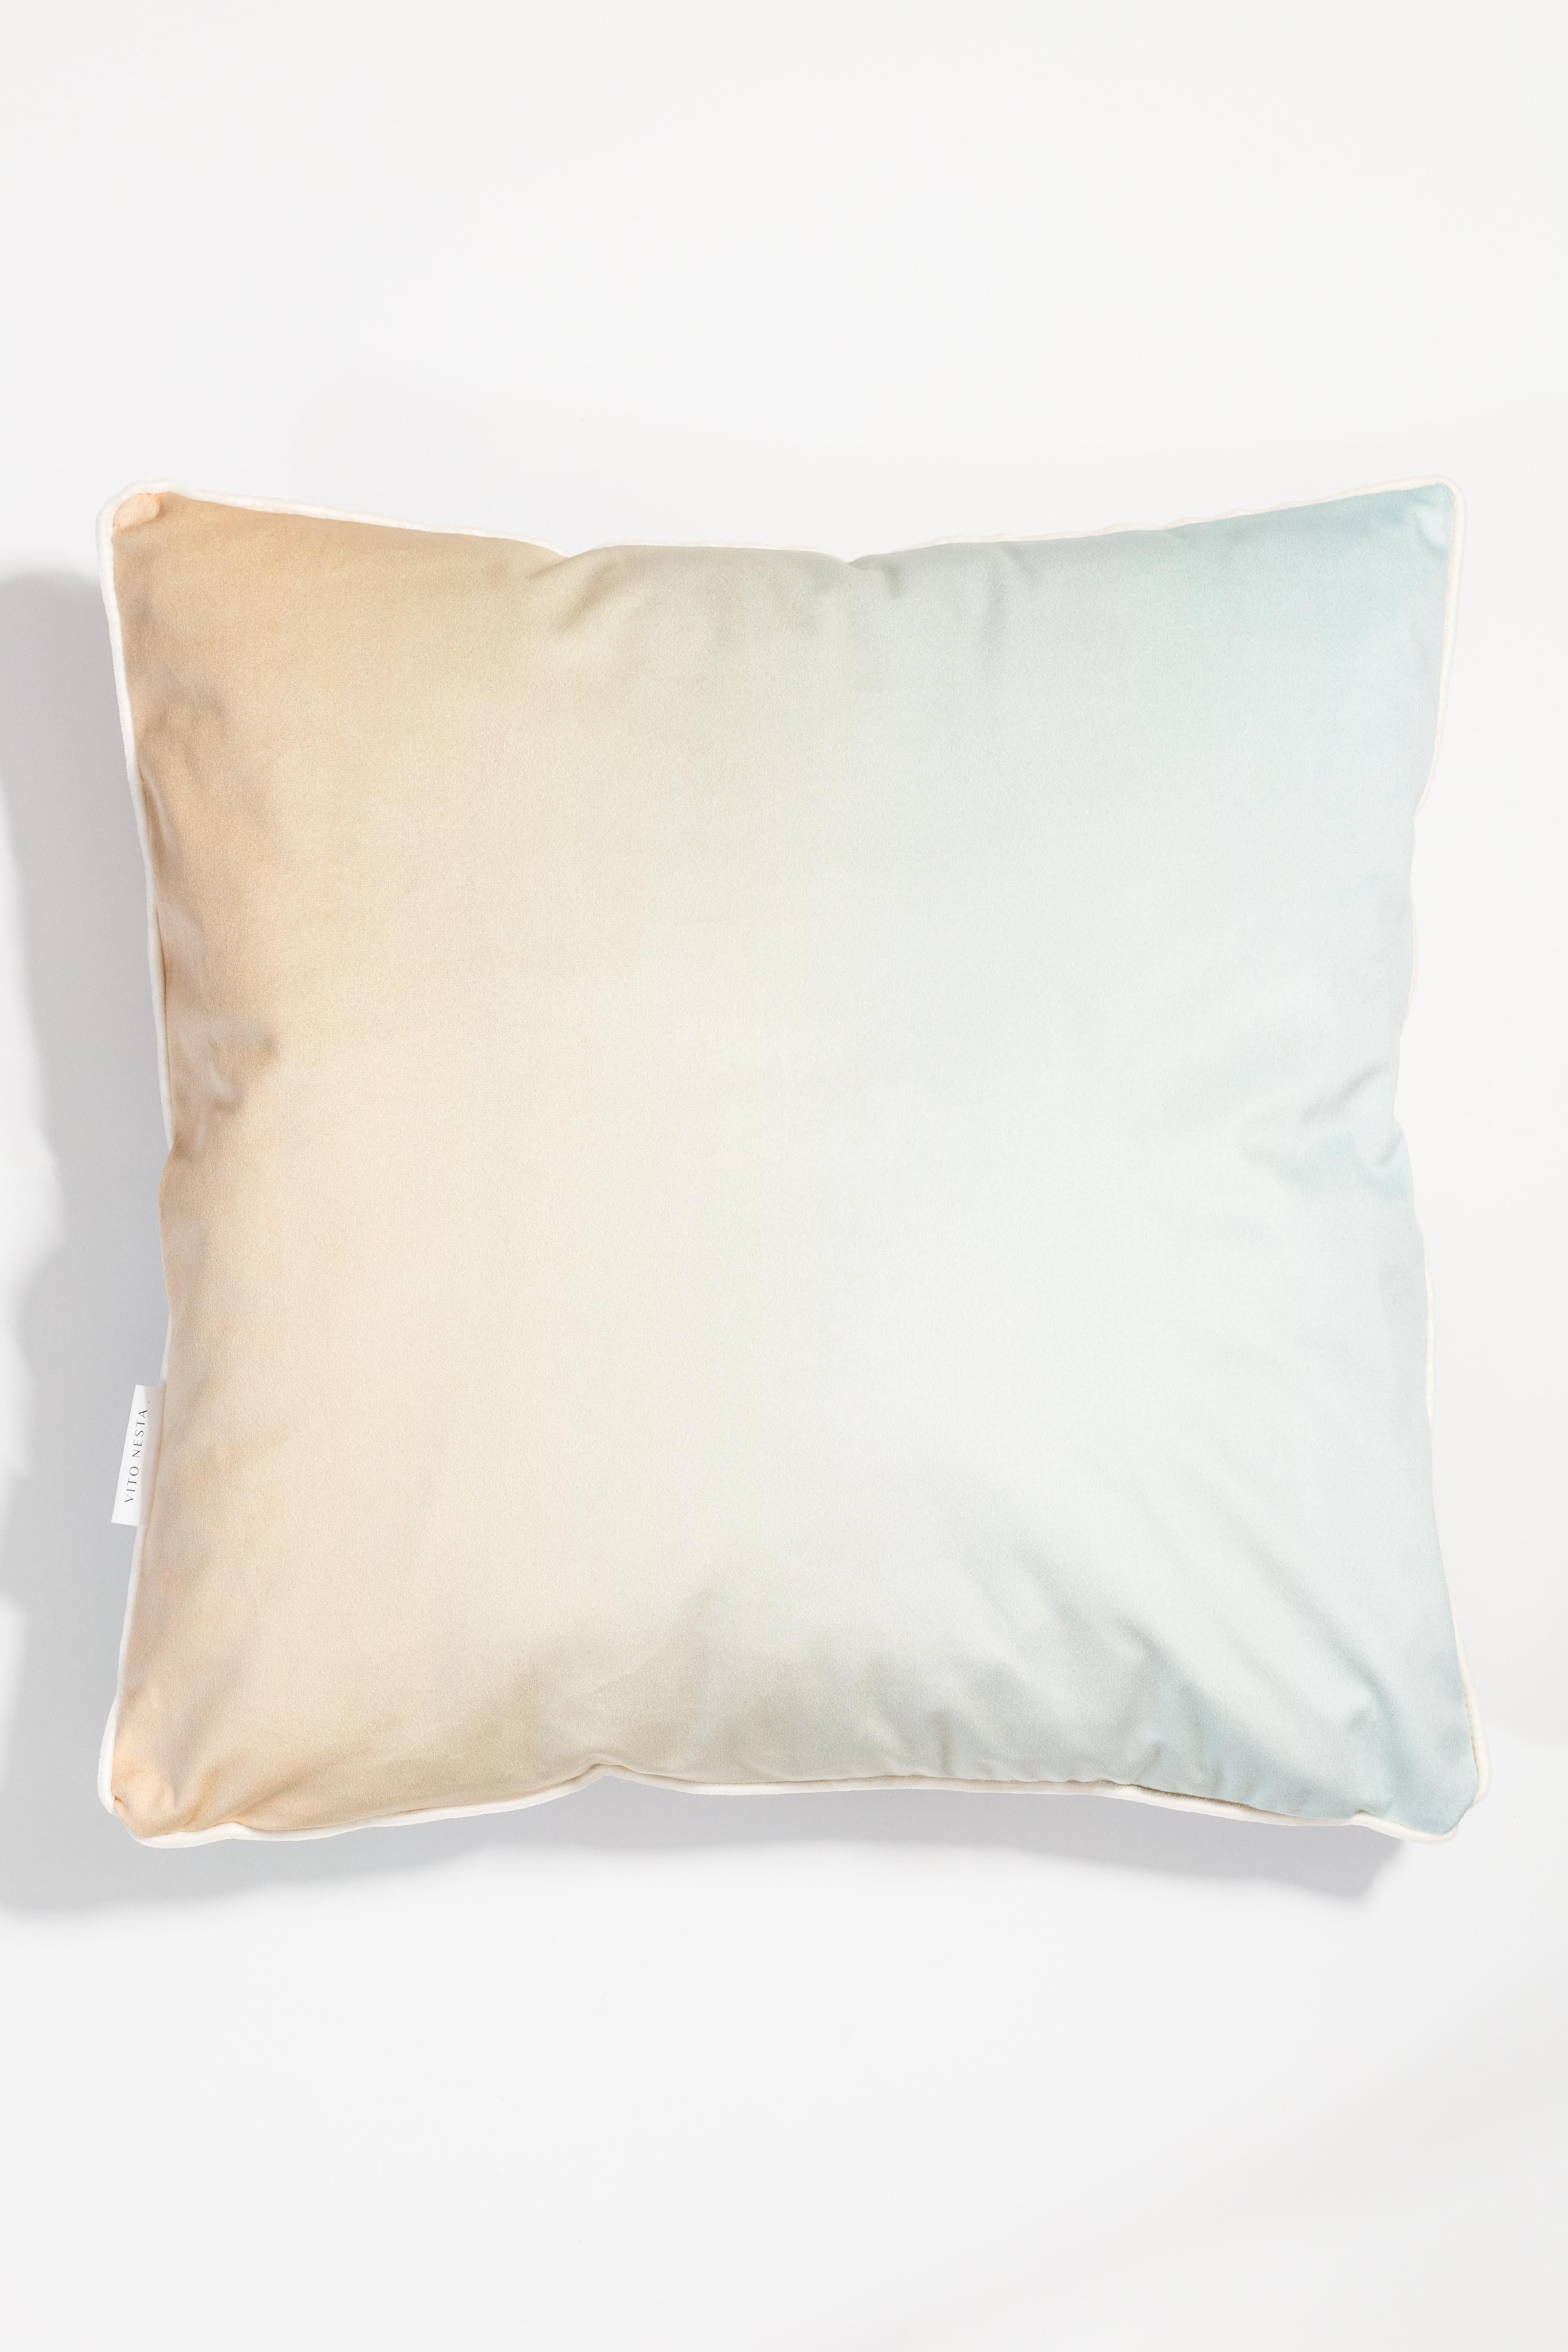 Cairo, Contemporary Velvet Printed Pillow by Vito Nesta For Sale 5